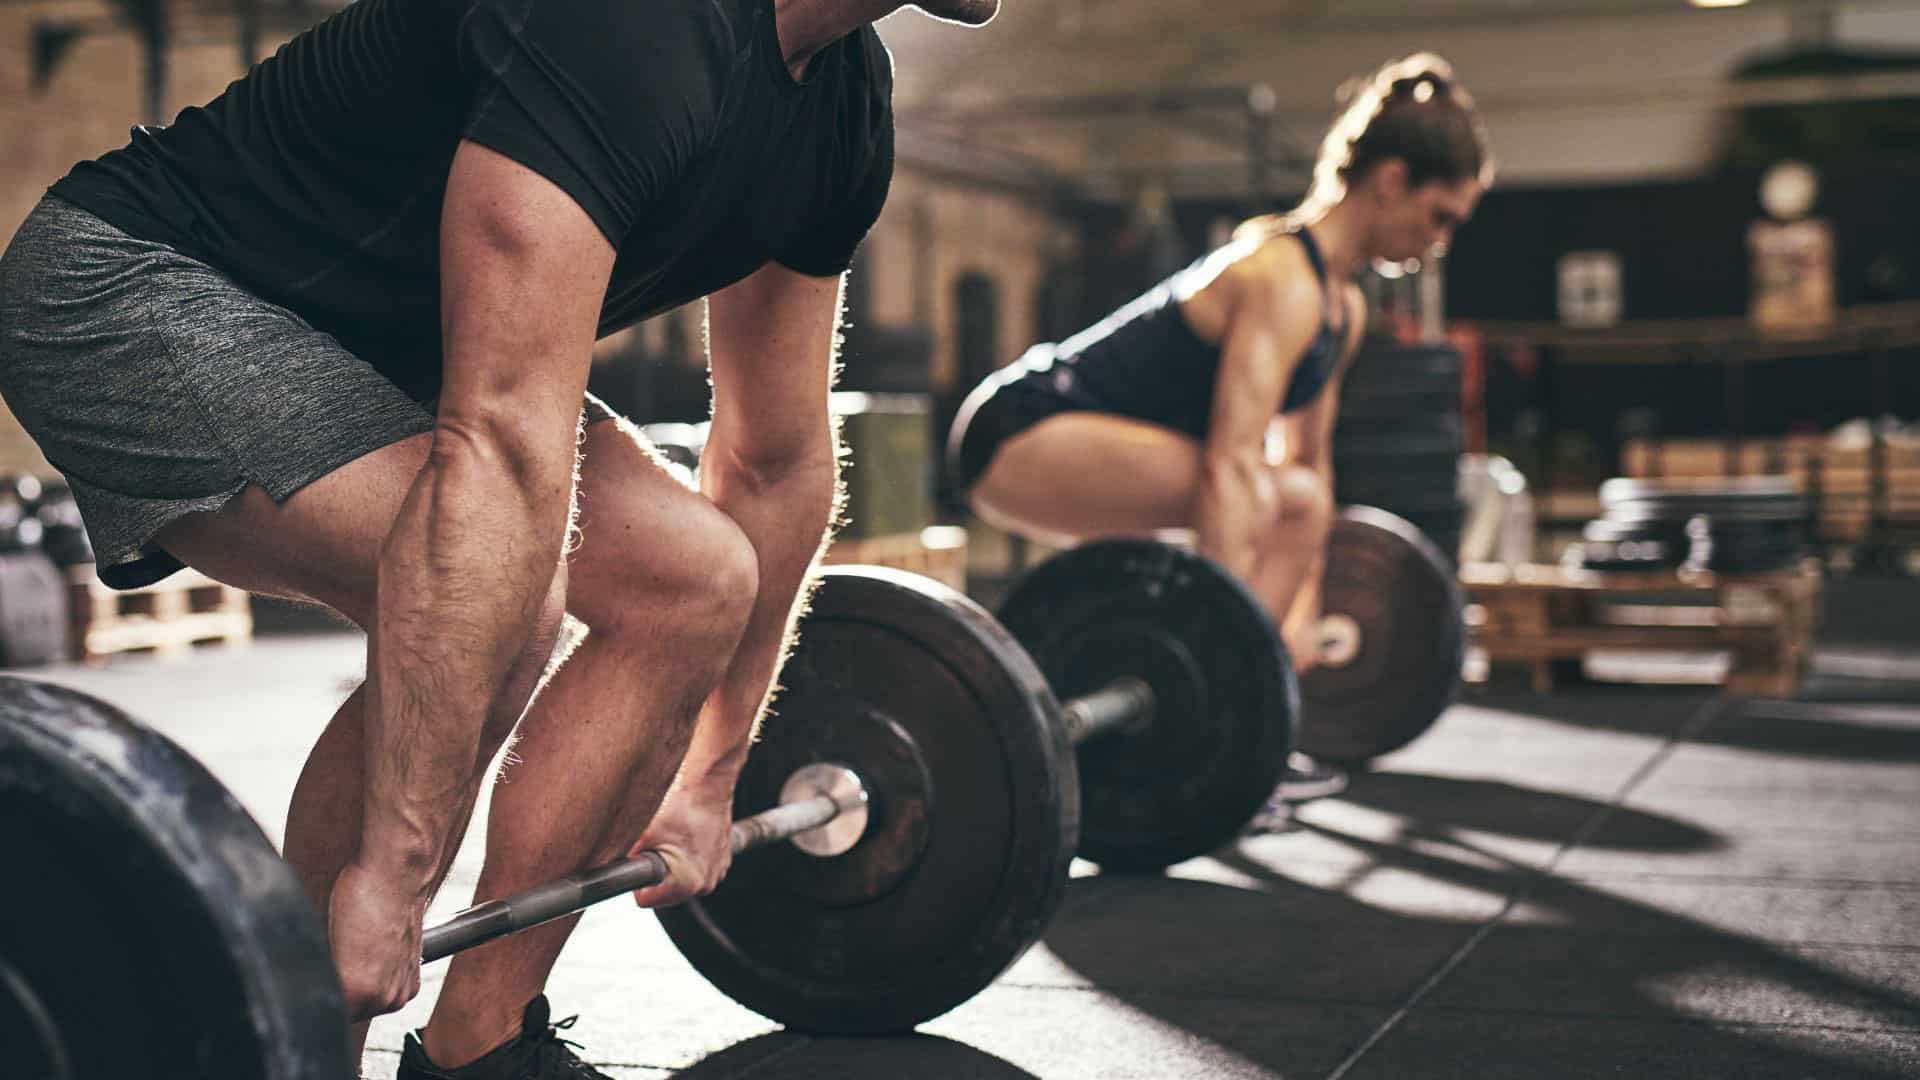 Gym flooring when using heavy weights.